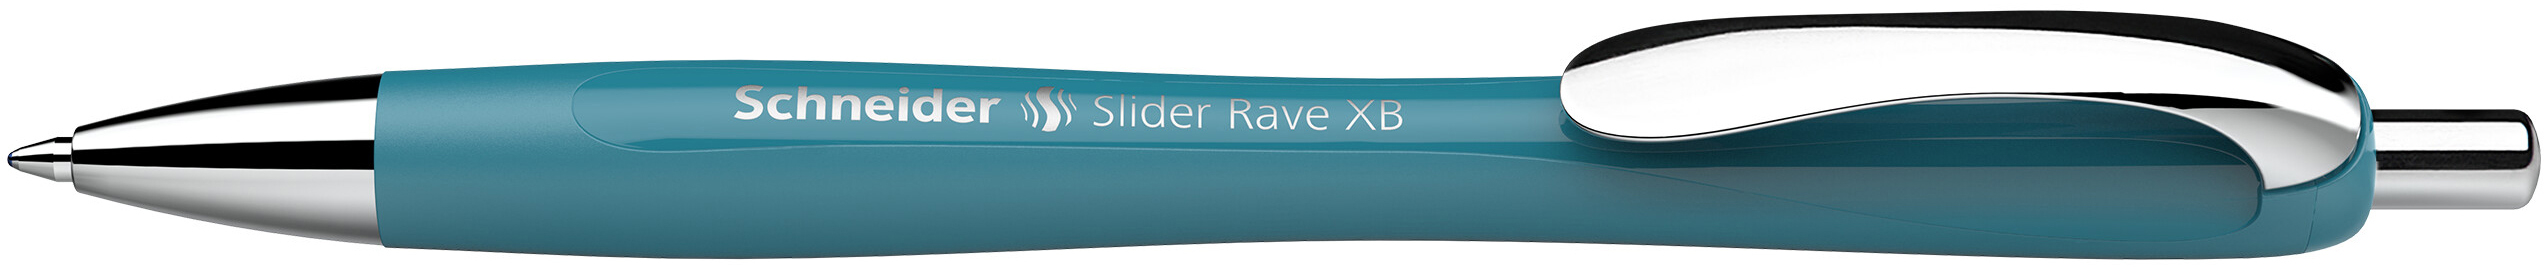 SCHNEIDER Stylo à bille Slider Rave XB 132513 teal, refill 0.7mm